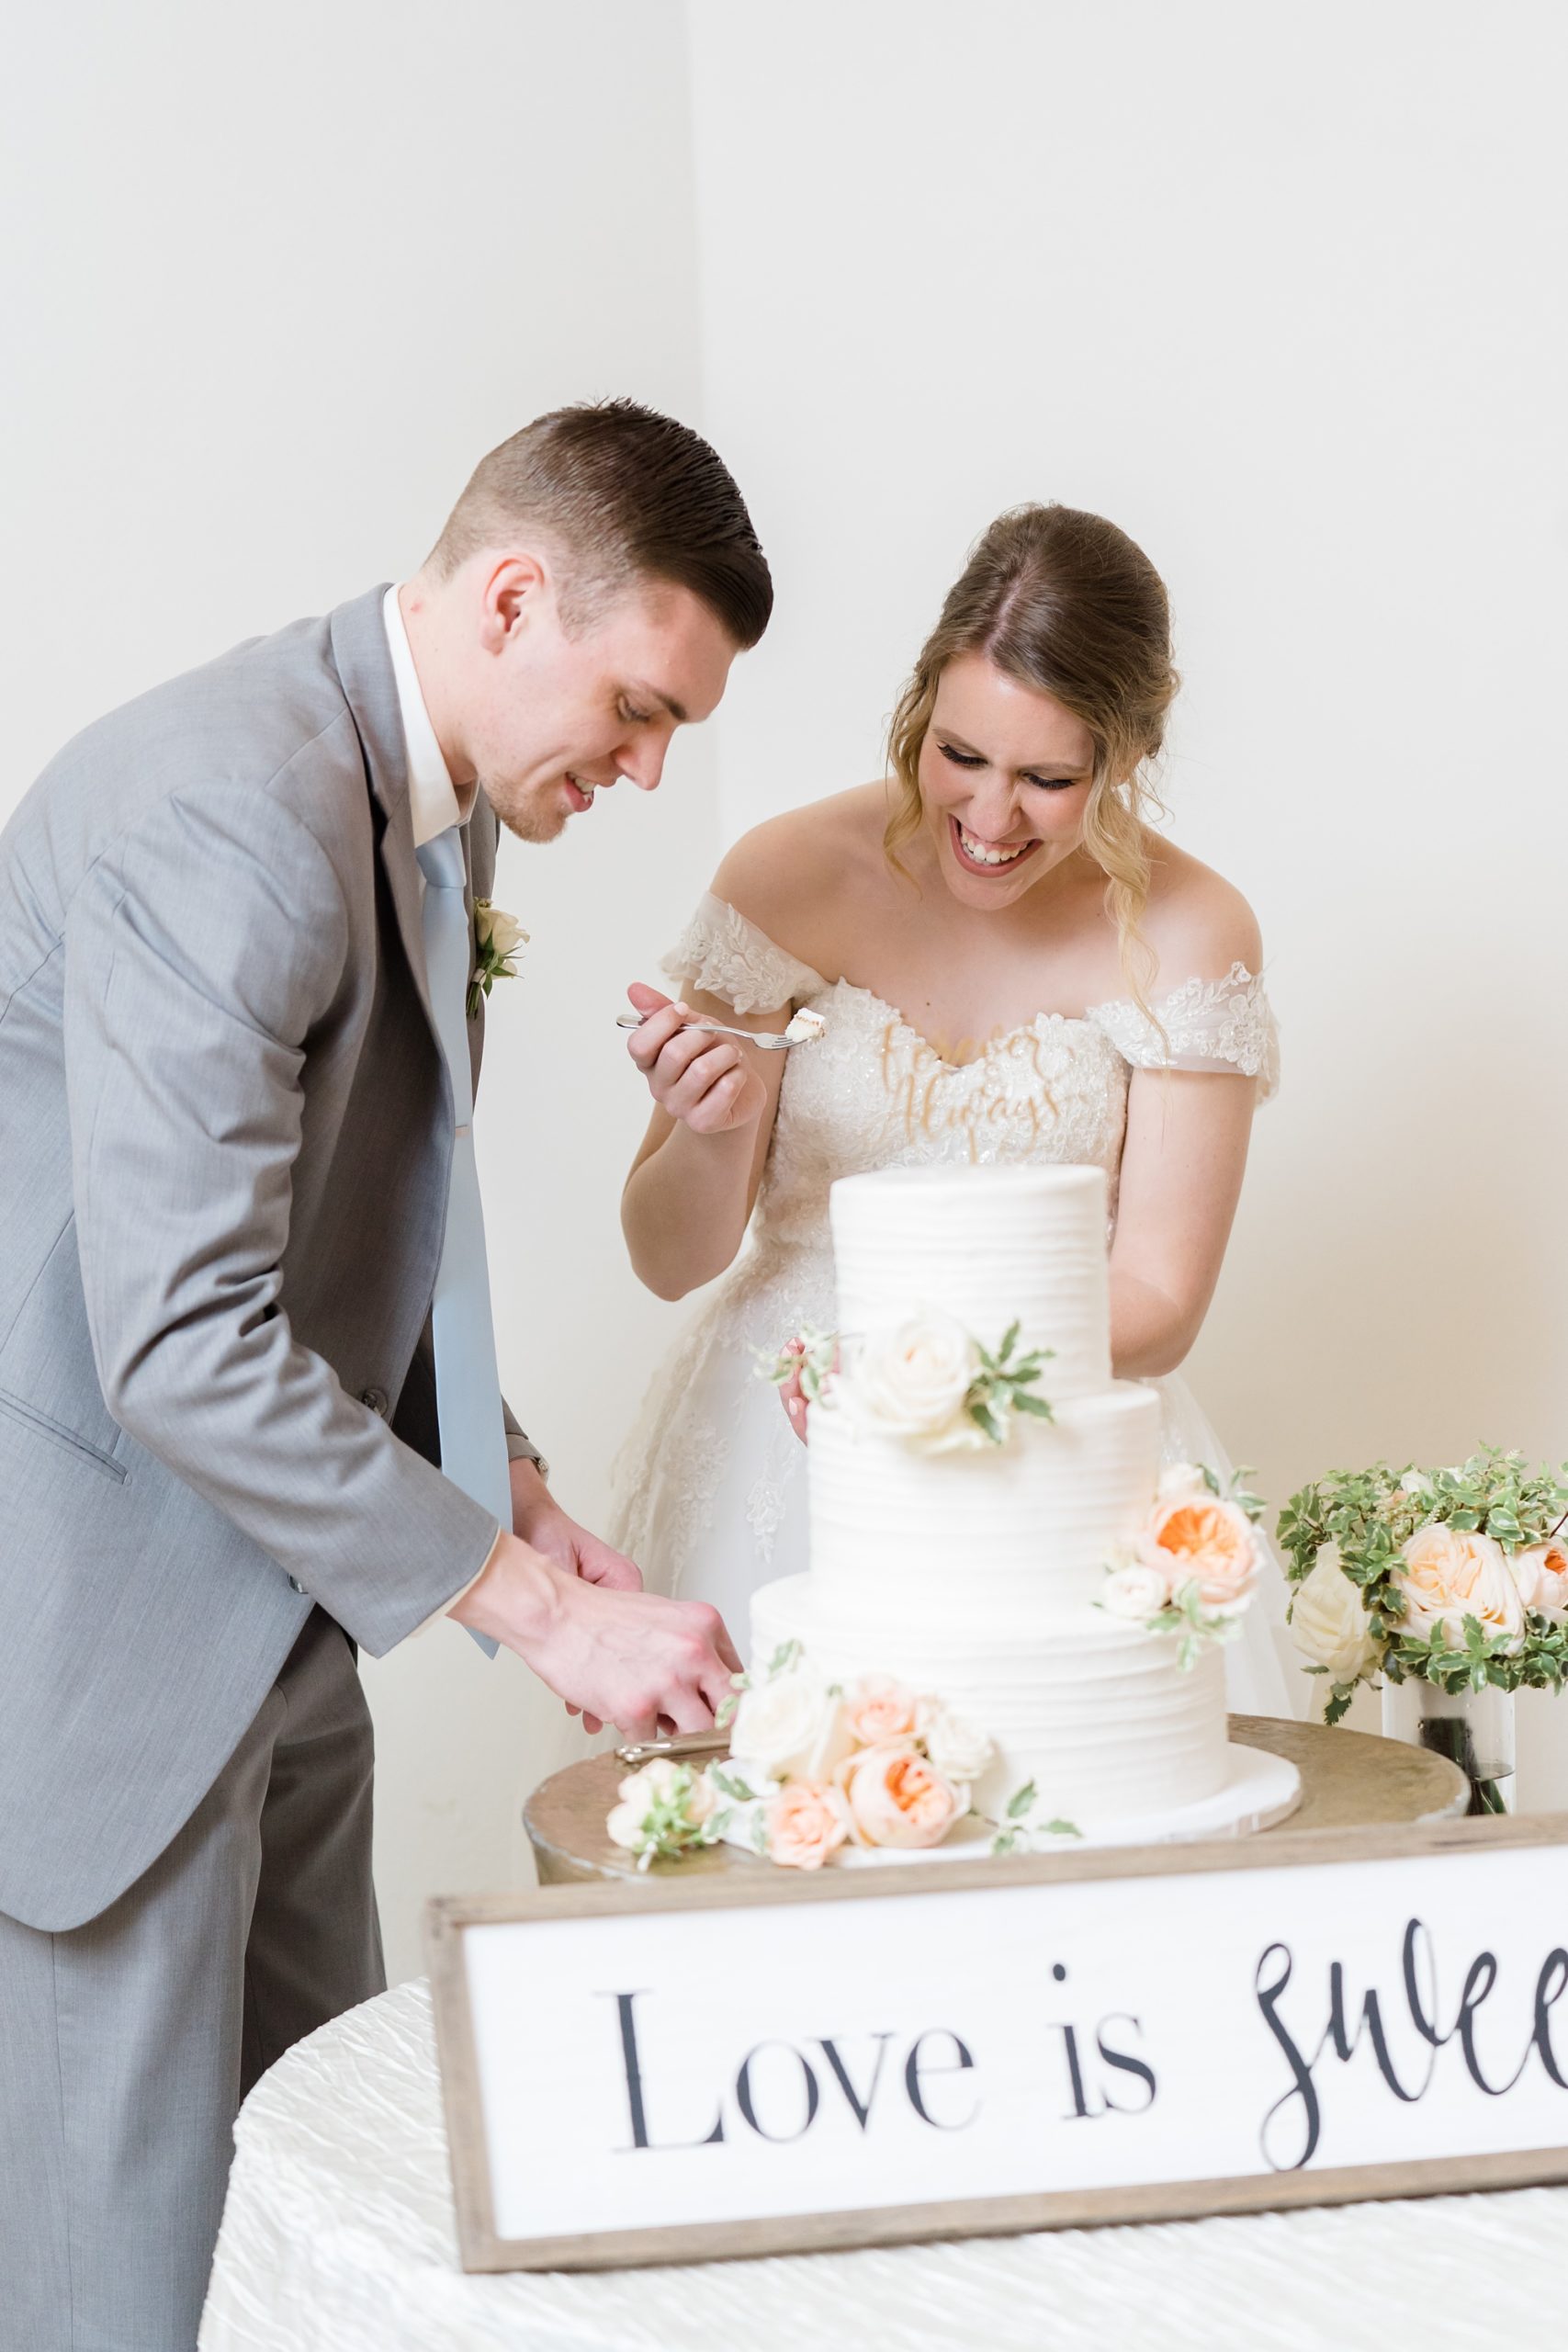 bride and groom cut wedding cake during Texas wedding reception